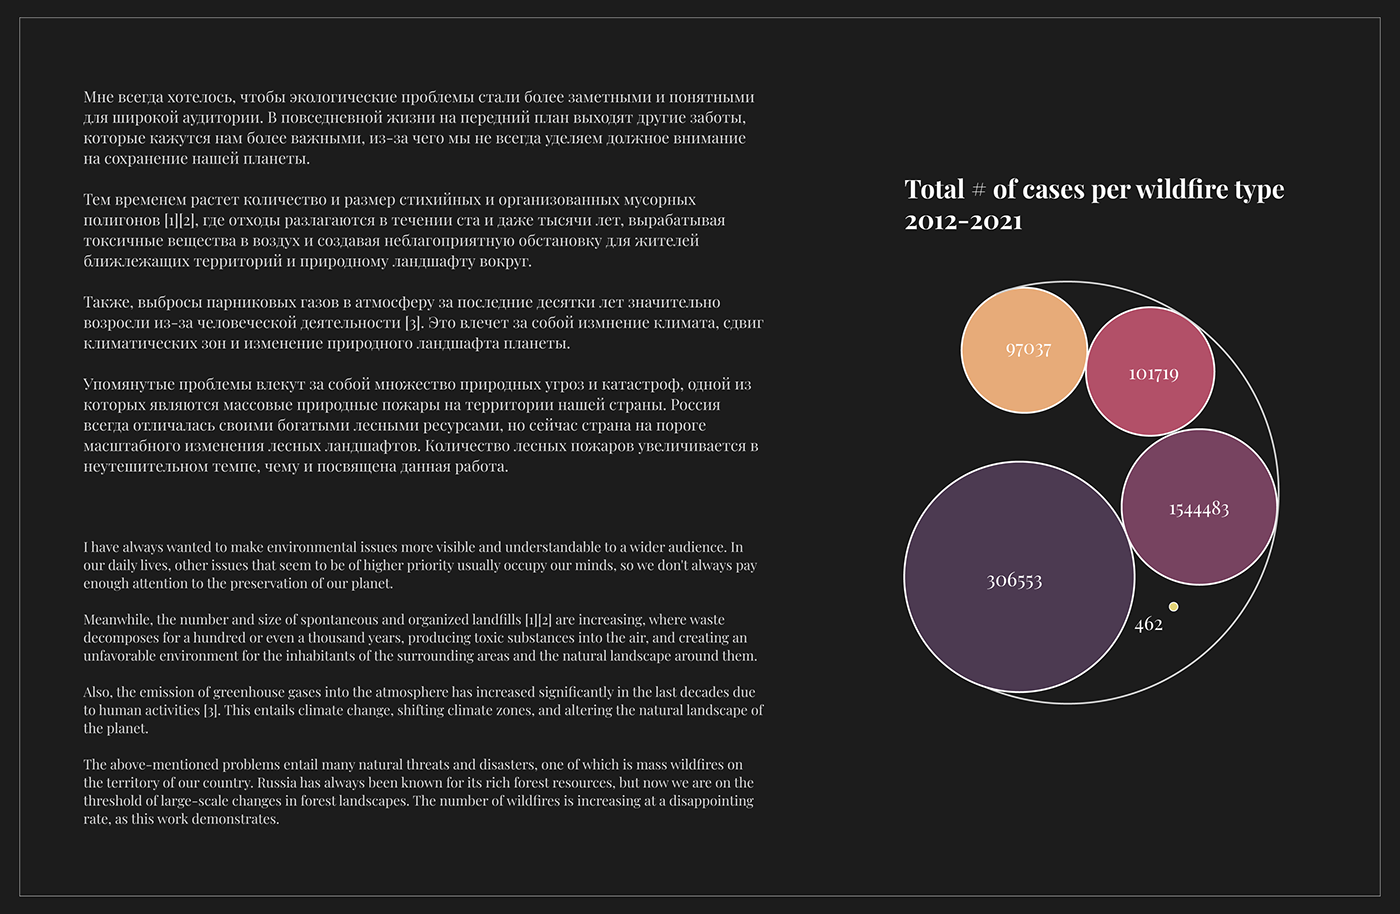 dataviz data visualization information design infographic vector adobe illustrator Data information